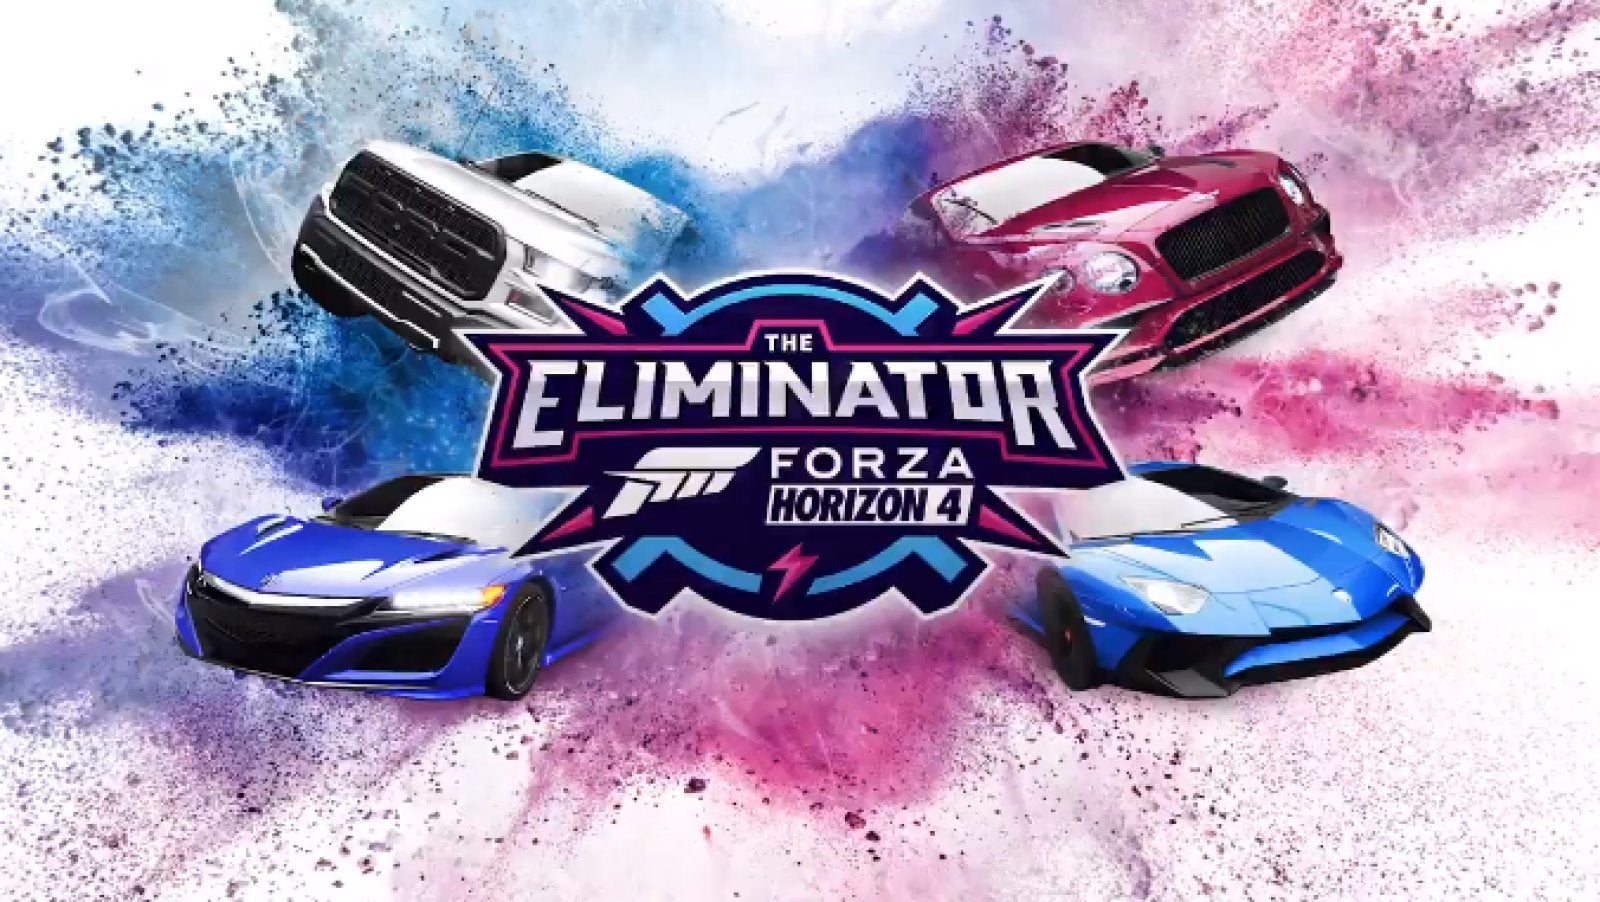 Image for Forza Horizon 4 gets battle royale mode called 'The Eliminator'